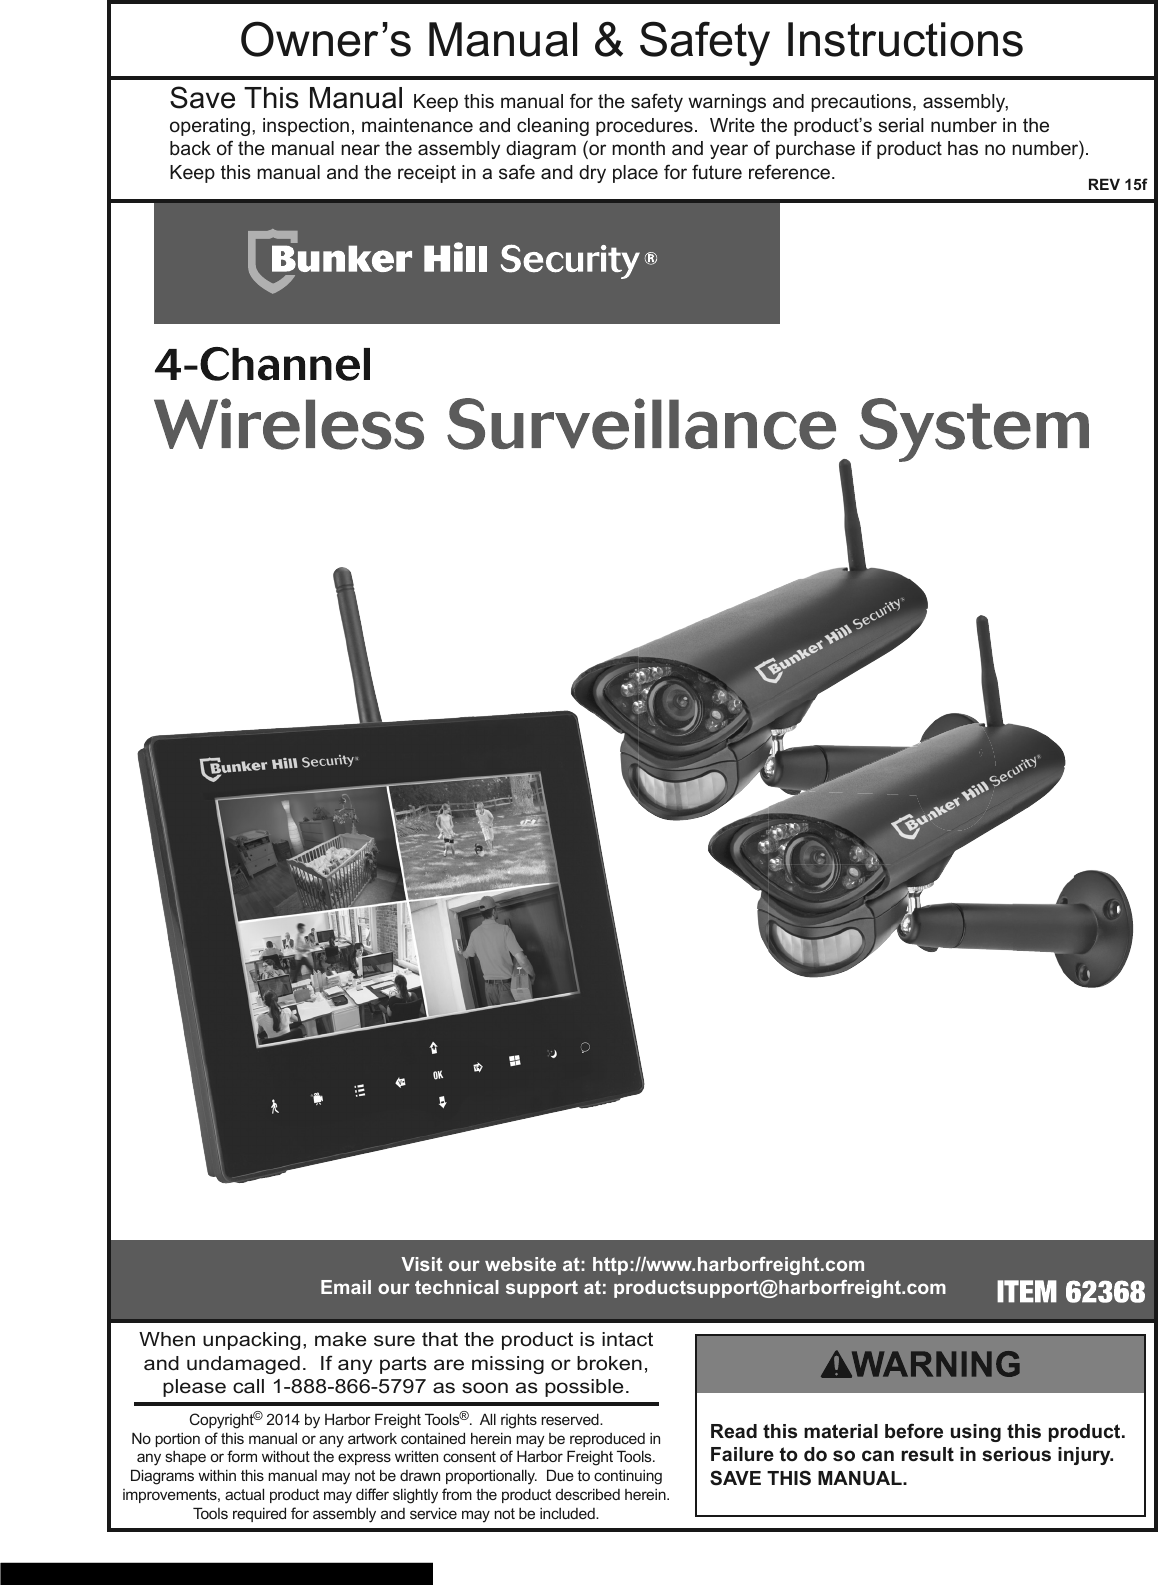 bunker hill security camera 68332 manual